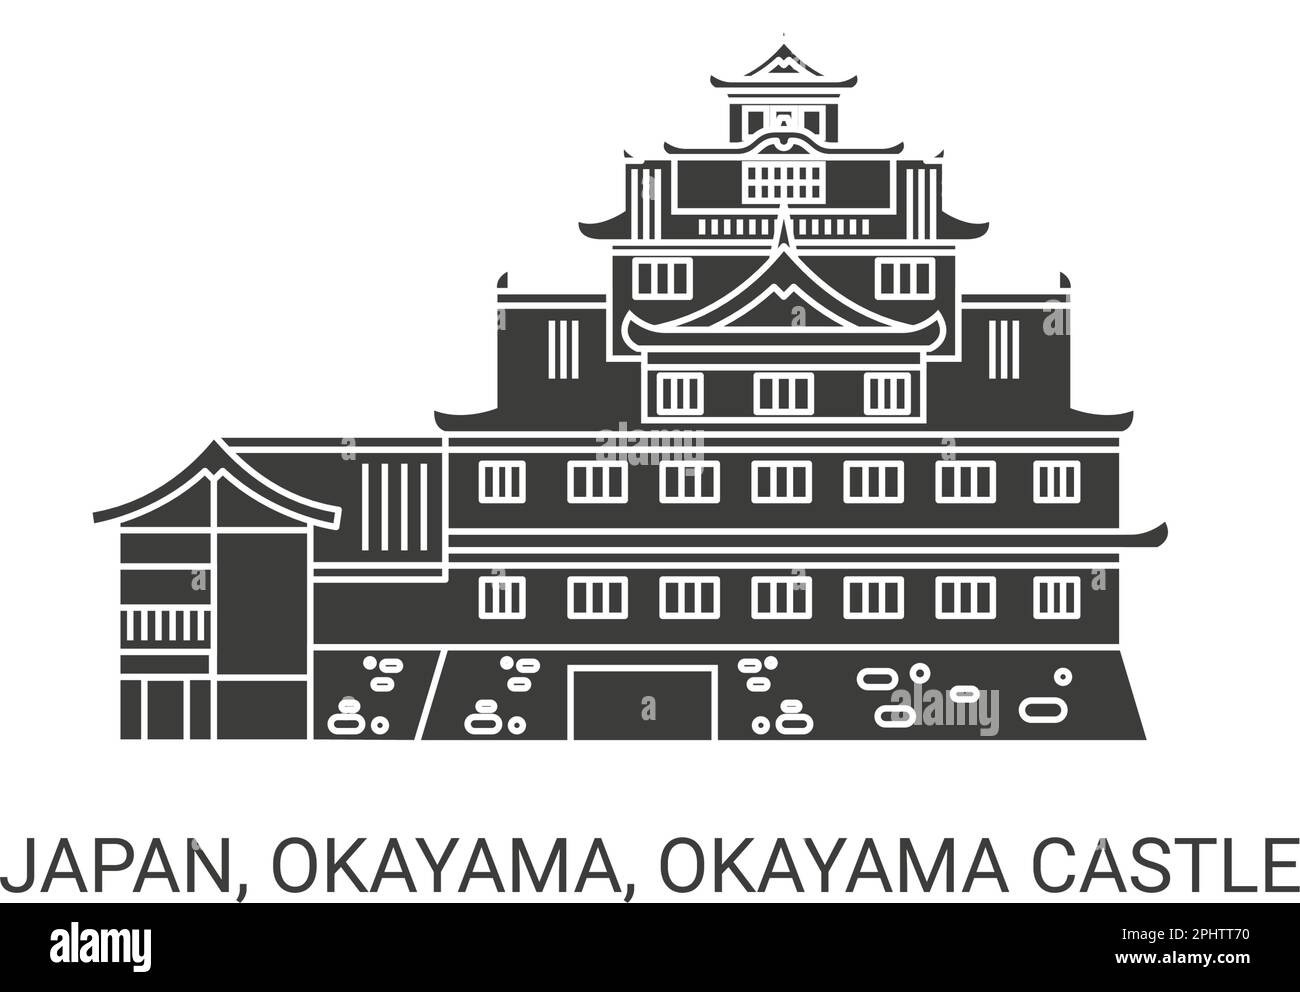 Japon, Okayama, Château d'Okayama Voyage illustration vecteur Illustration de Vecteur